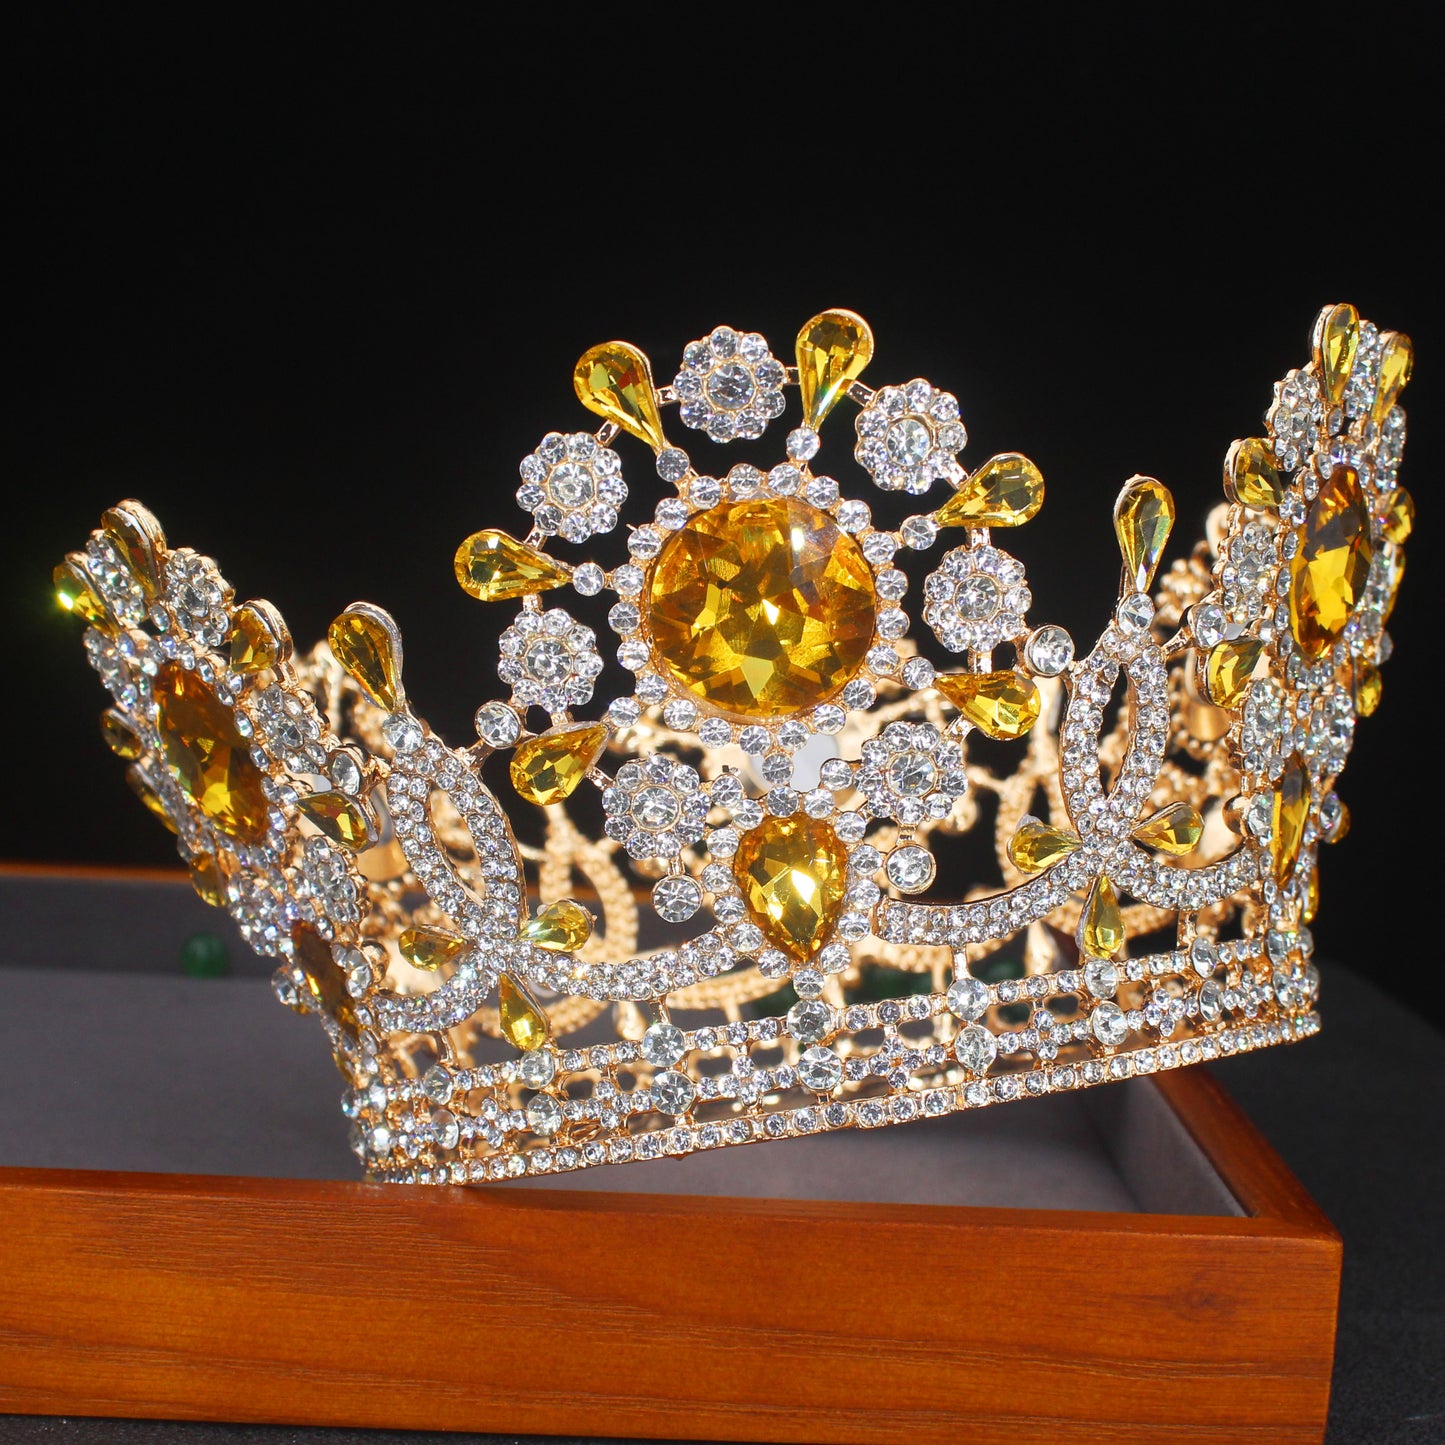 Luxury Crown Queen Elizabeth White Style Baroque Royal Crown